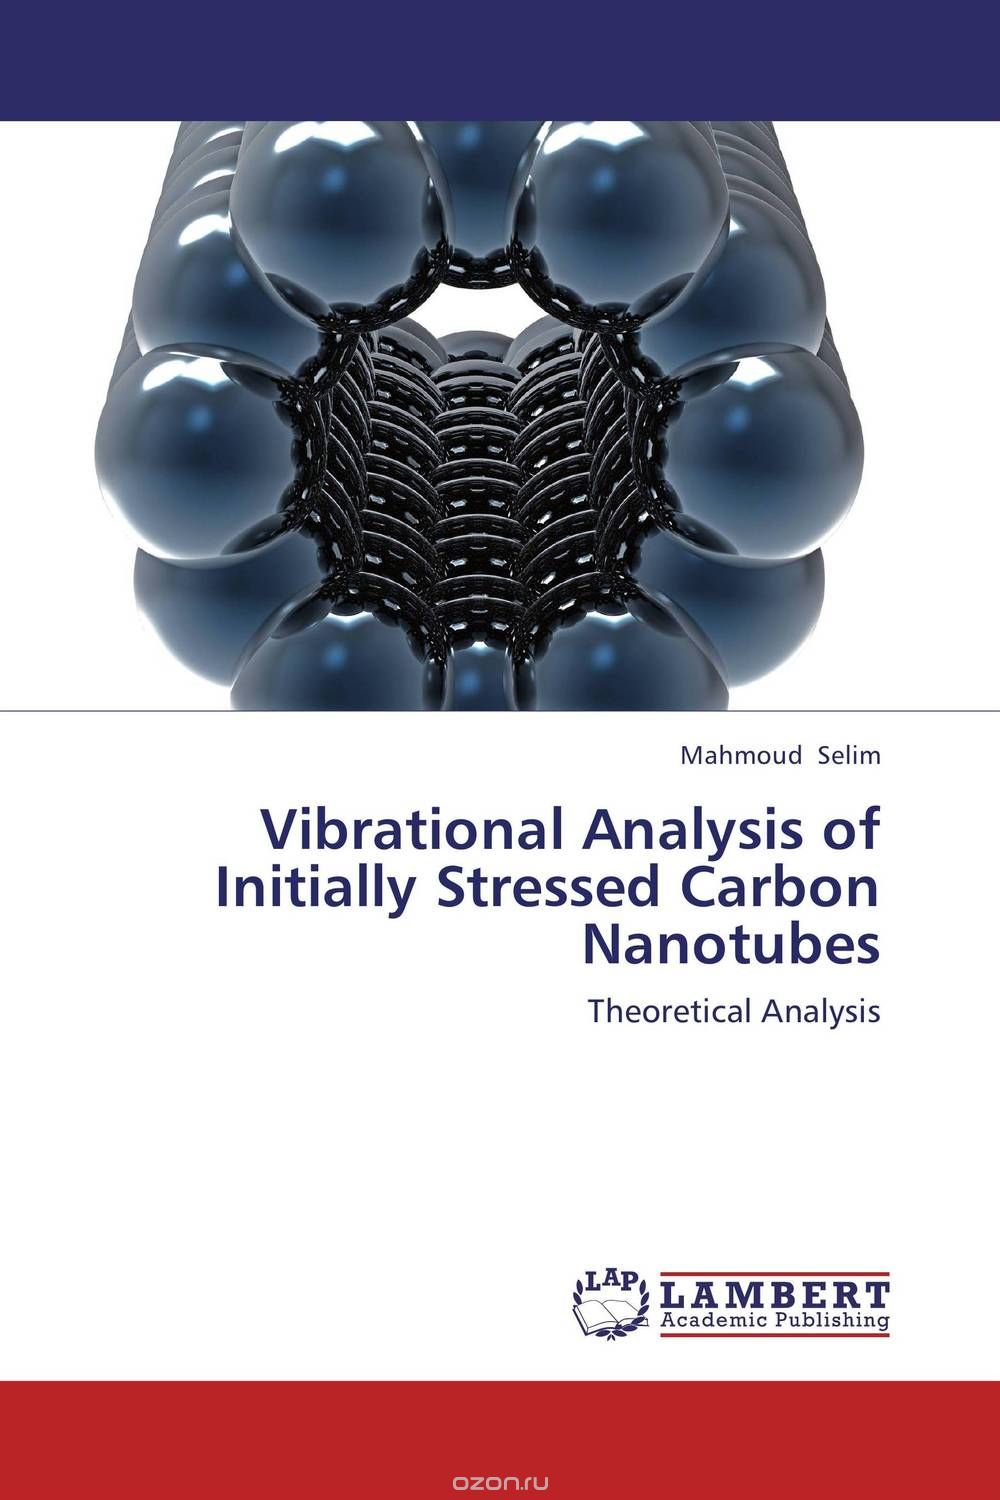 Скачать книгу "Vibrational Analysis of Initially Stressed Carbon Nanotubes"